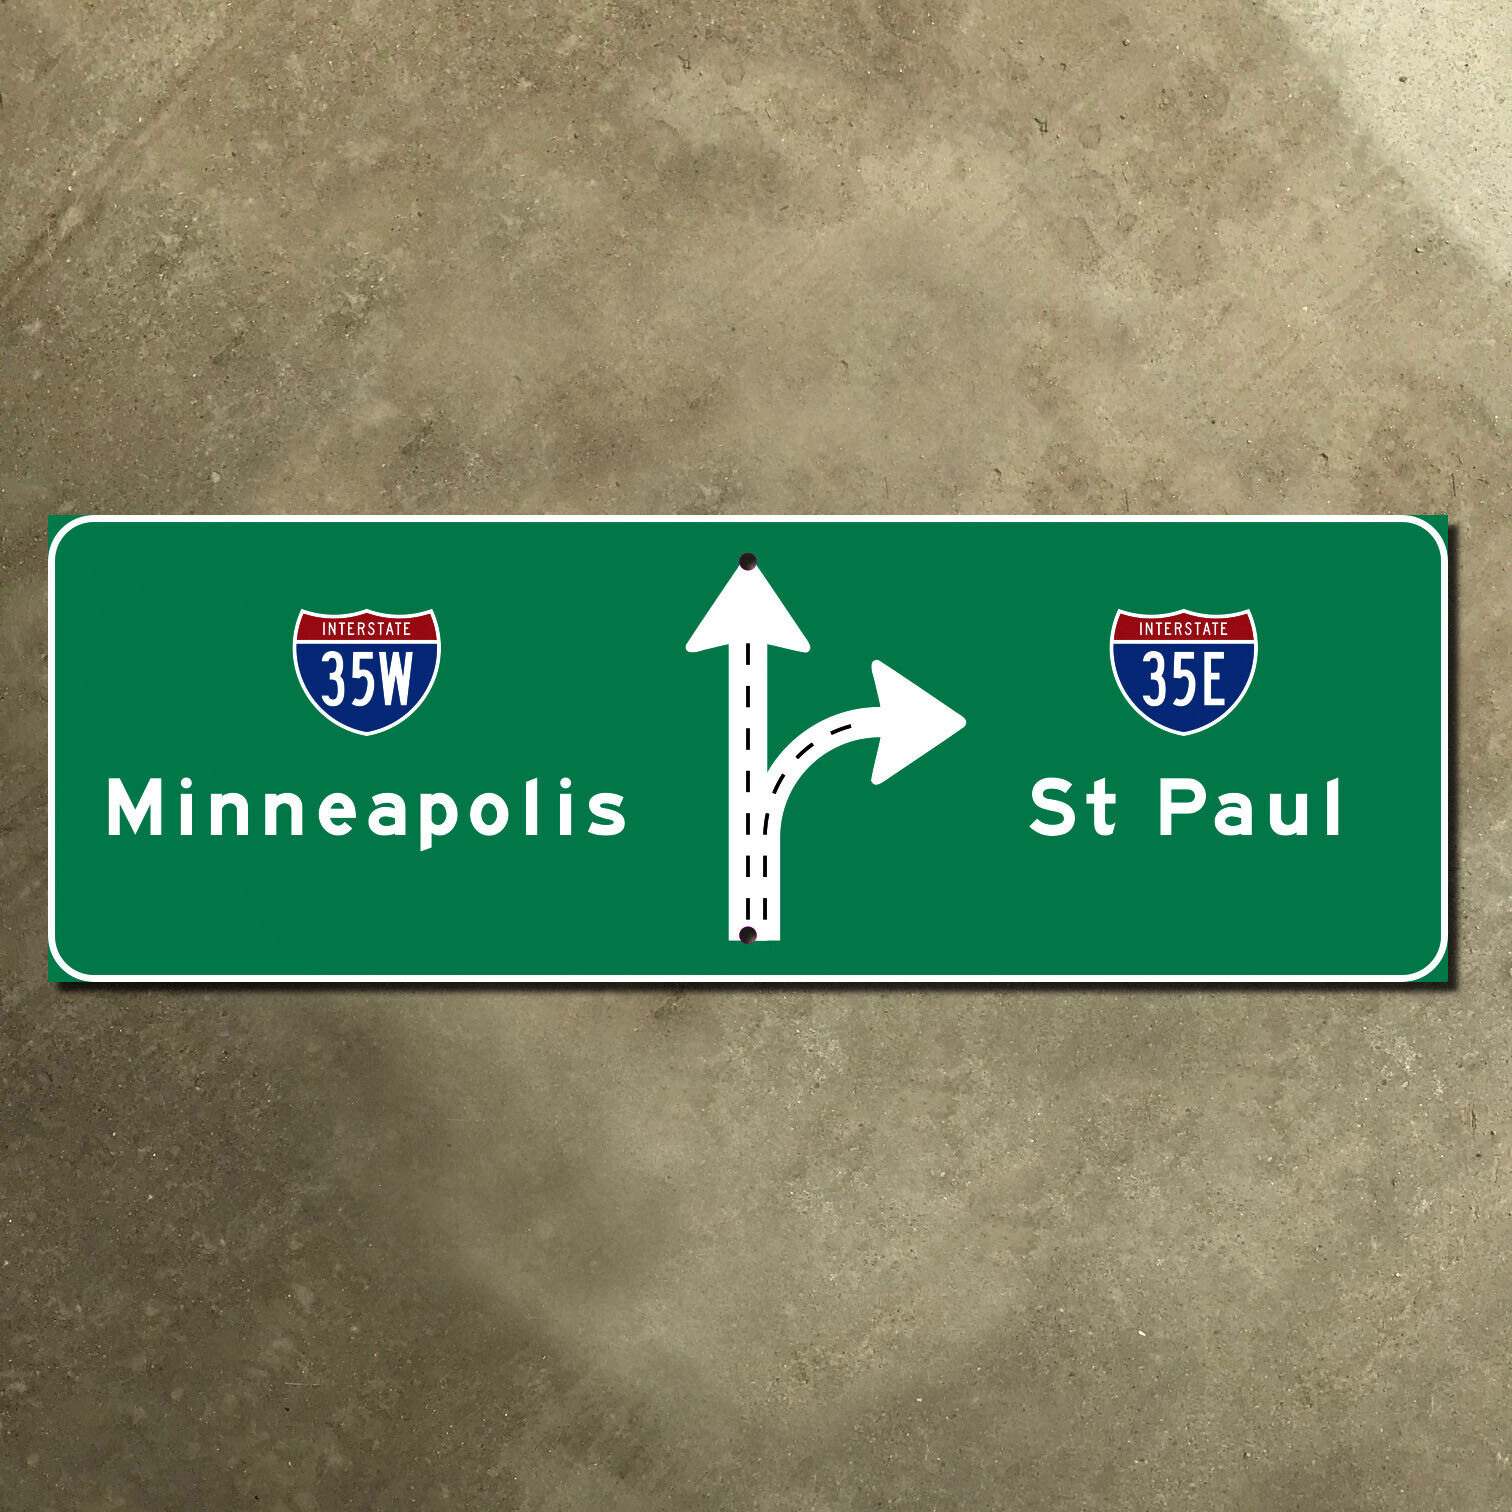 Minnesota Minneapolis St Paul Interstate 35E 35W highway marker road sign 21x7